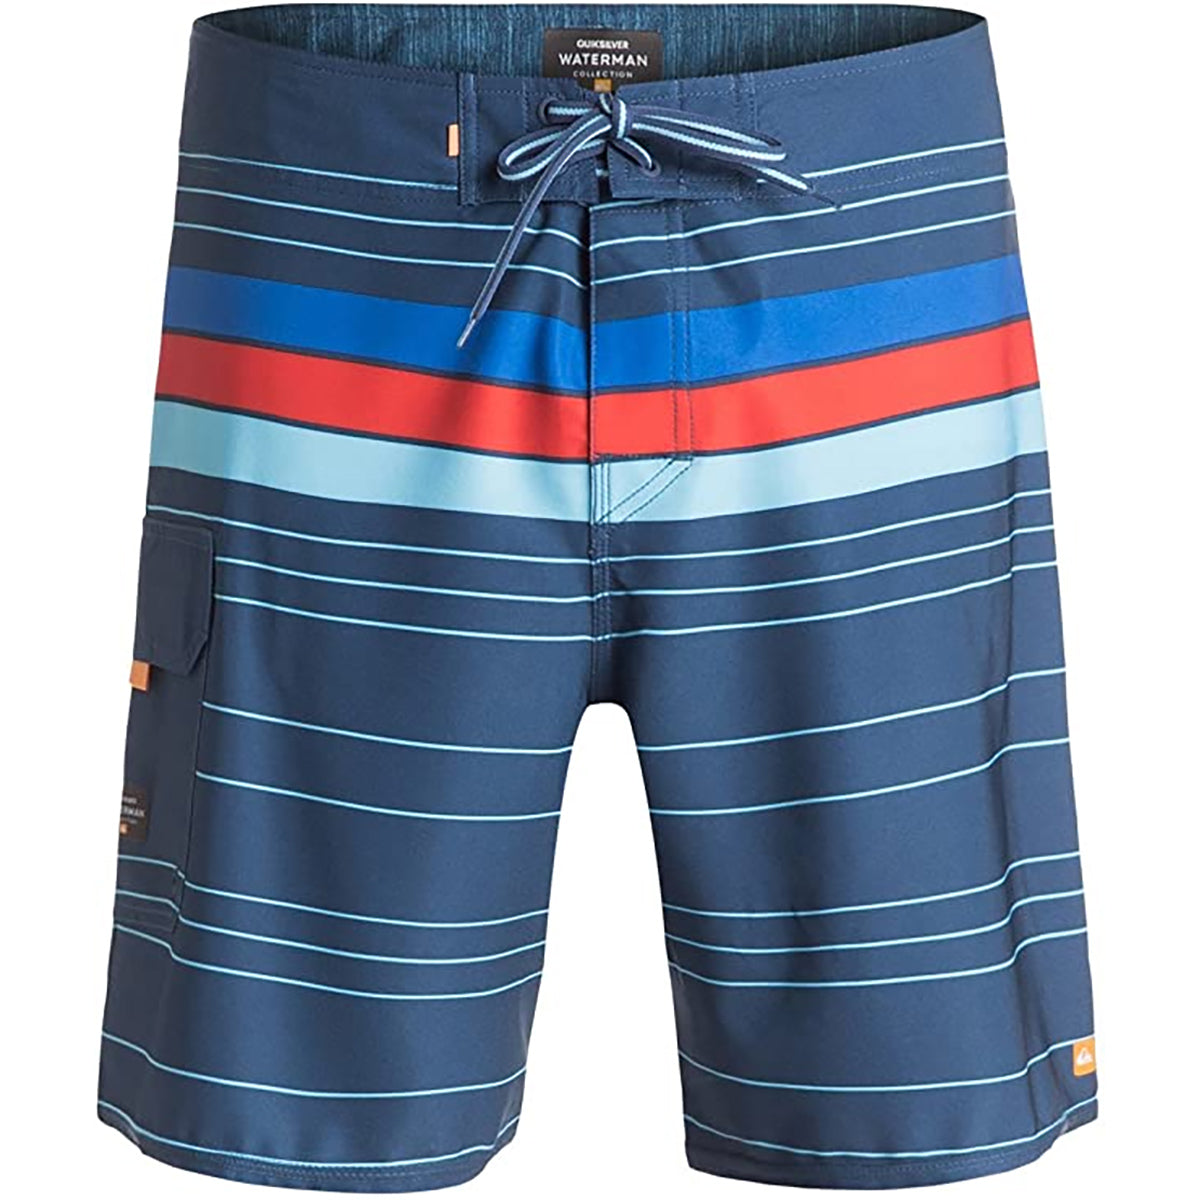 Quiksilver Waterman Cedros Island Men's Boardshort Shorts - Ensign Blue